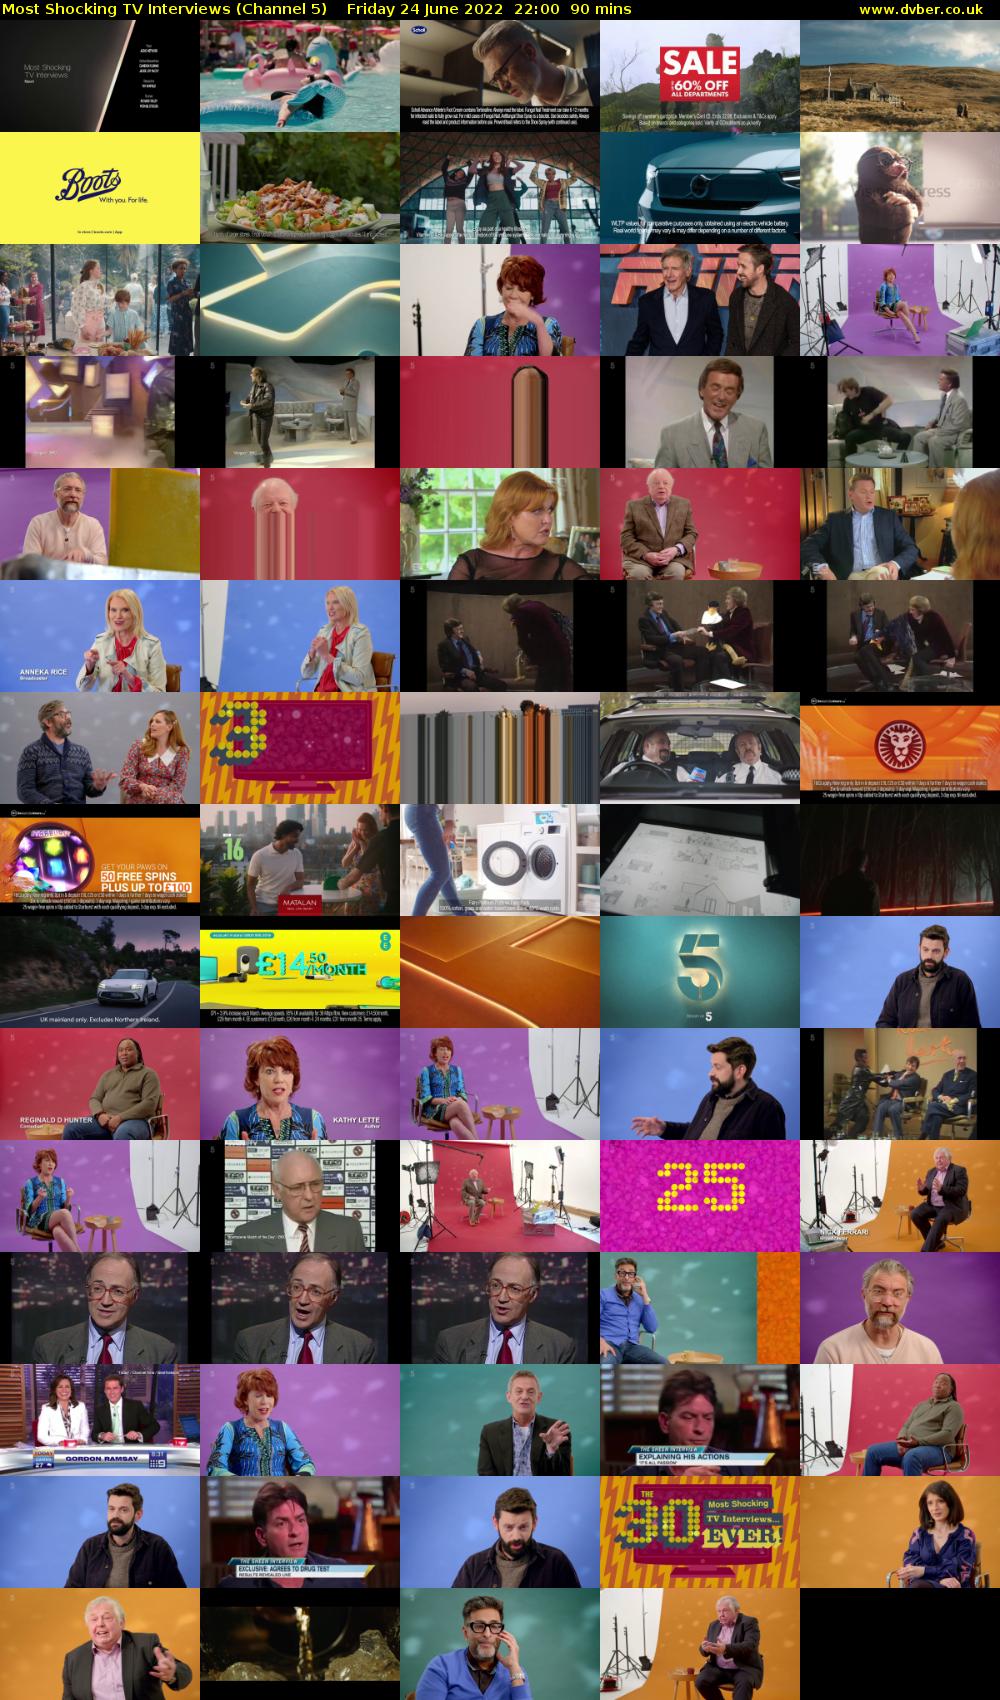 Most Shocking TV Interviews (Channel 5) Friday 24 June 2022 22:00 - 23:30